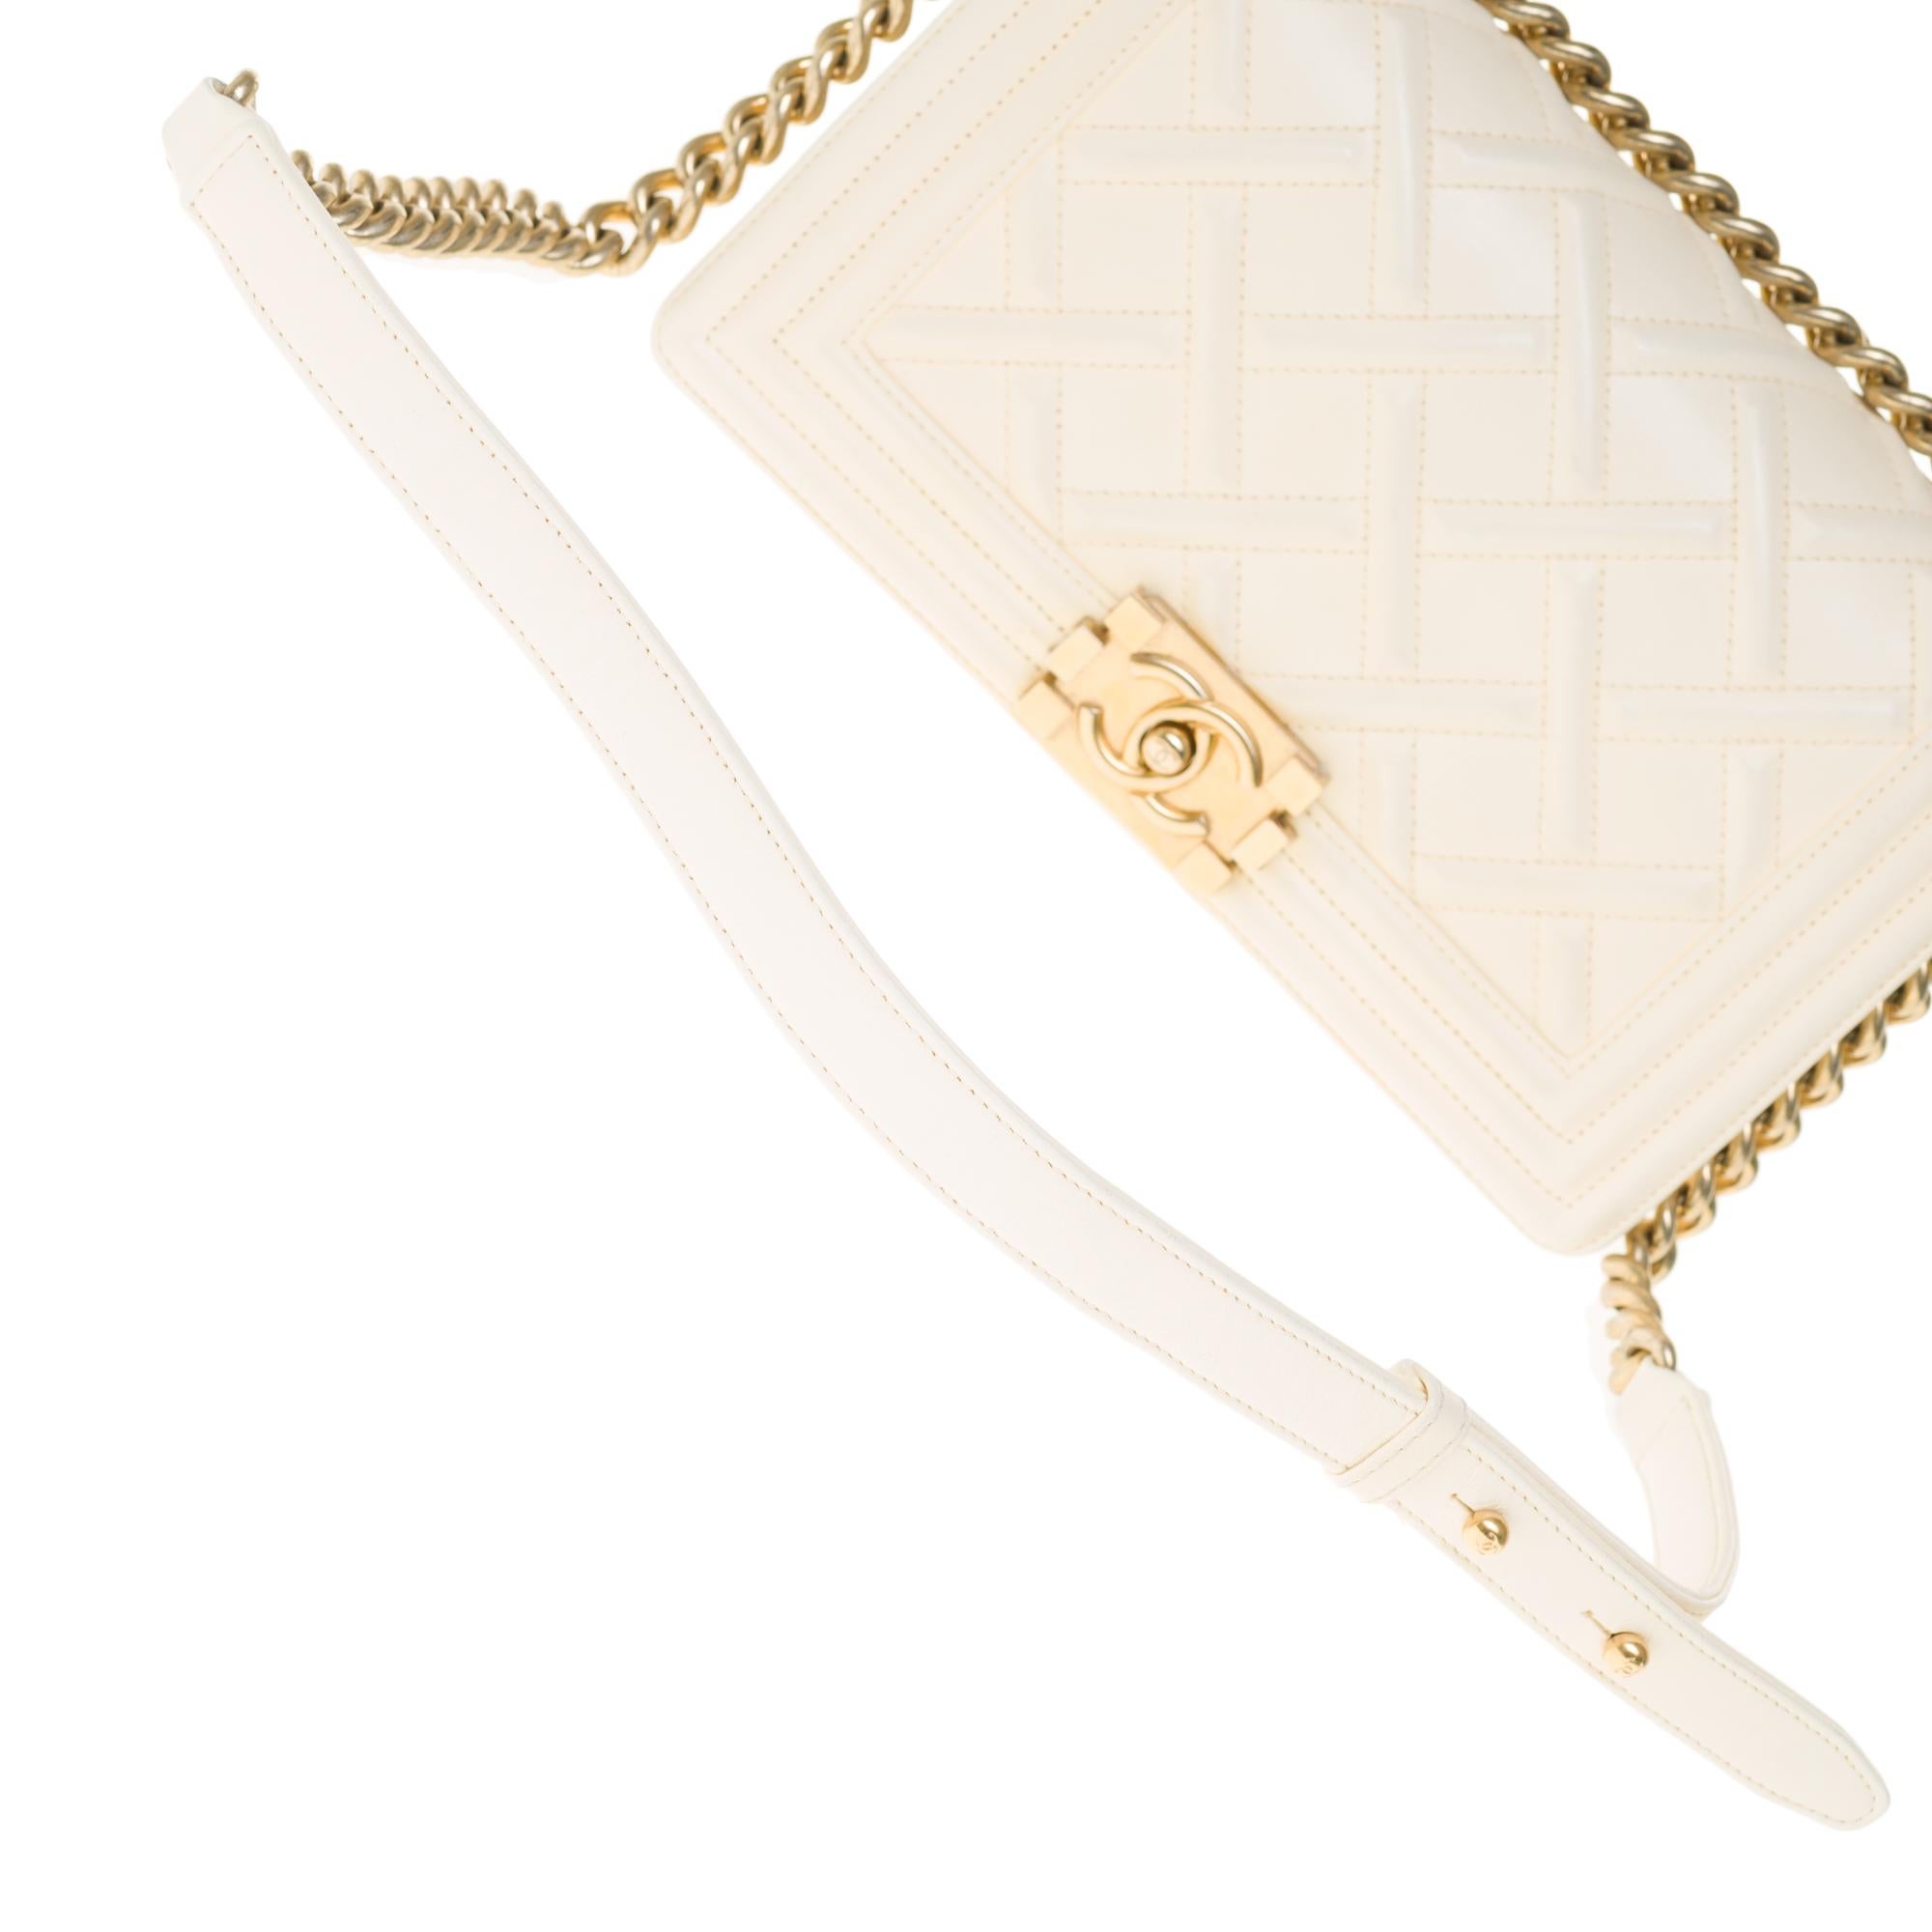 Chanel Boy Paris/Edinburgh handbag in ivory embossed leather, GHW ! 4